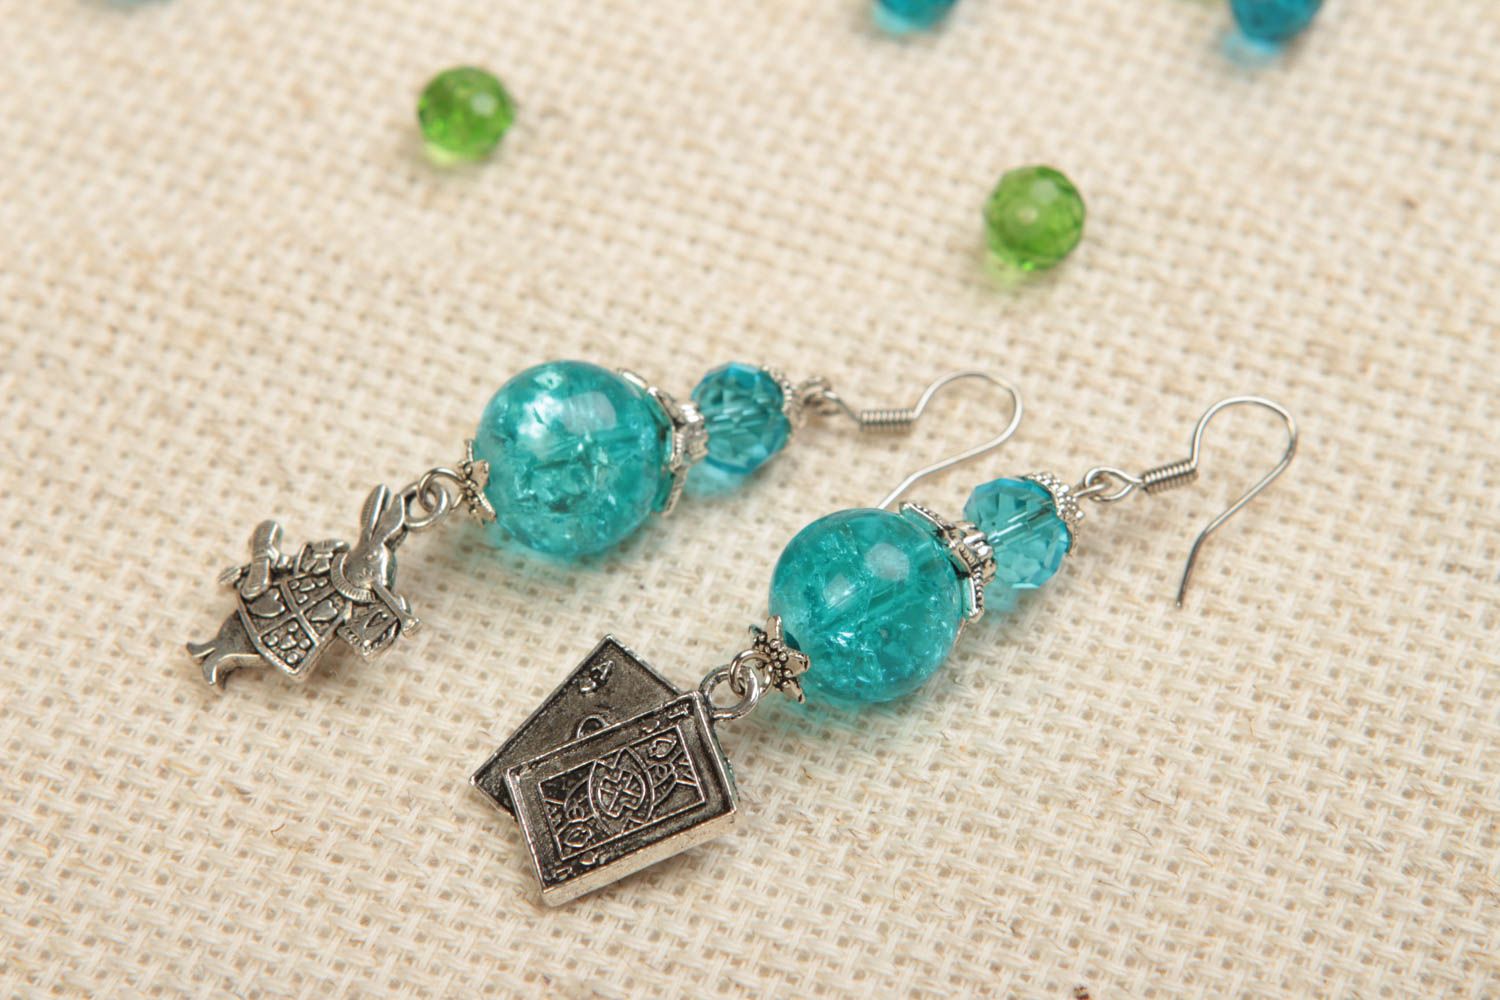 Unusual handmade metal earrings with beads crystal earrings gifts for her photo 1